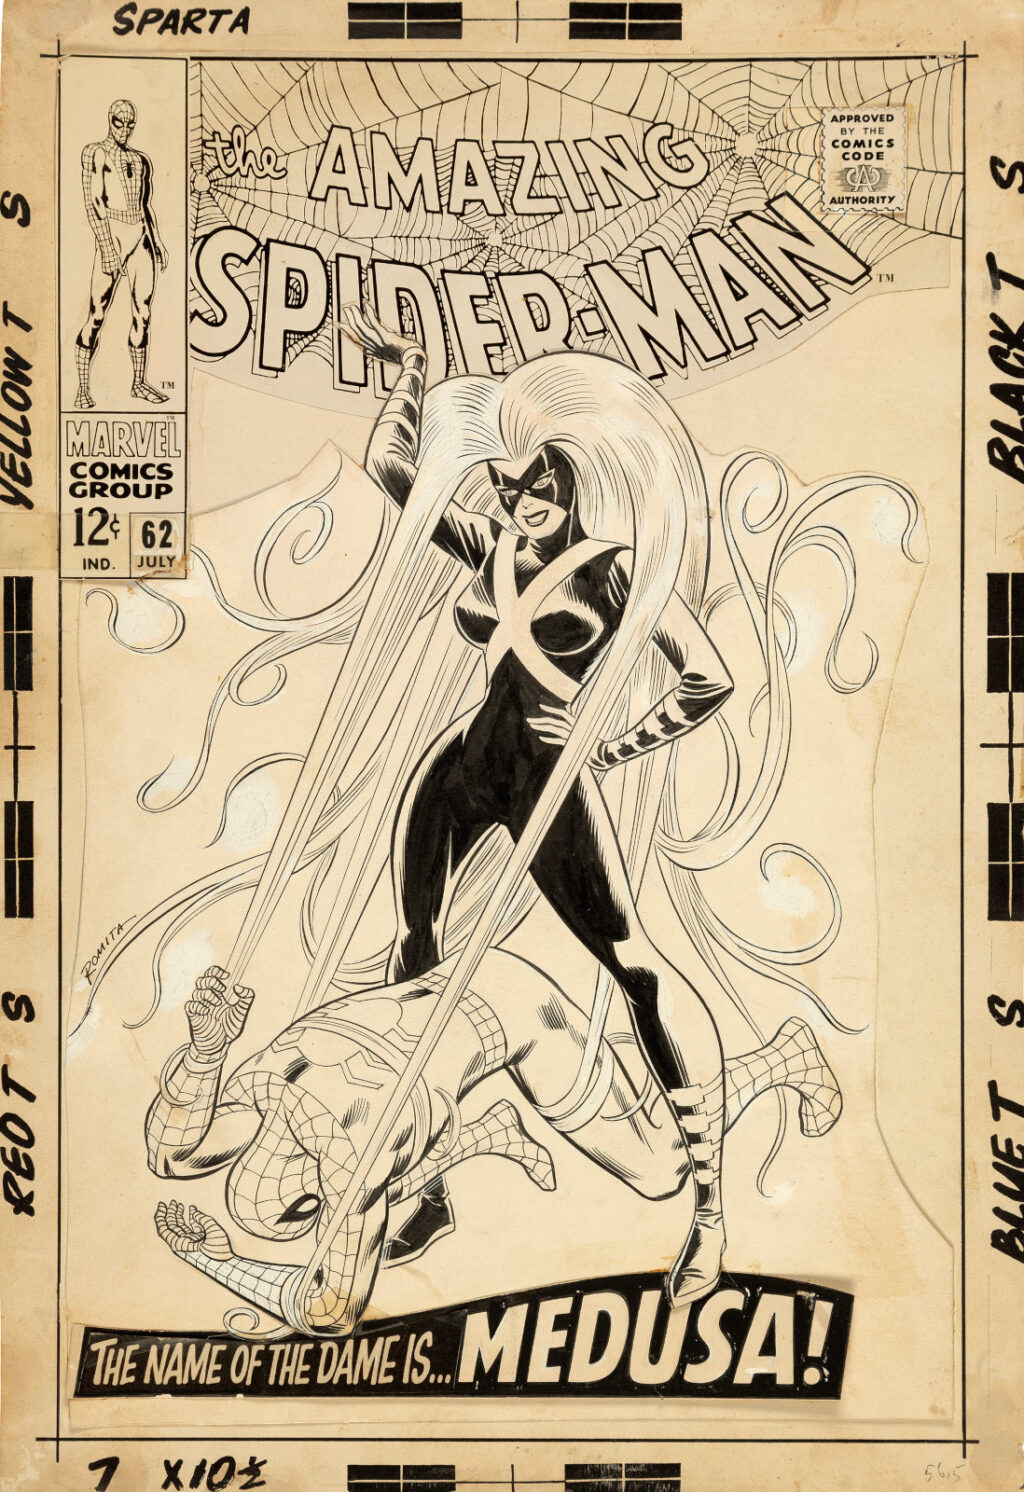 Amazing Spider Man issue 62 by John Romita